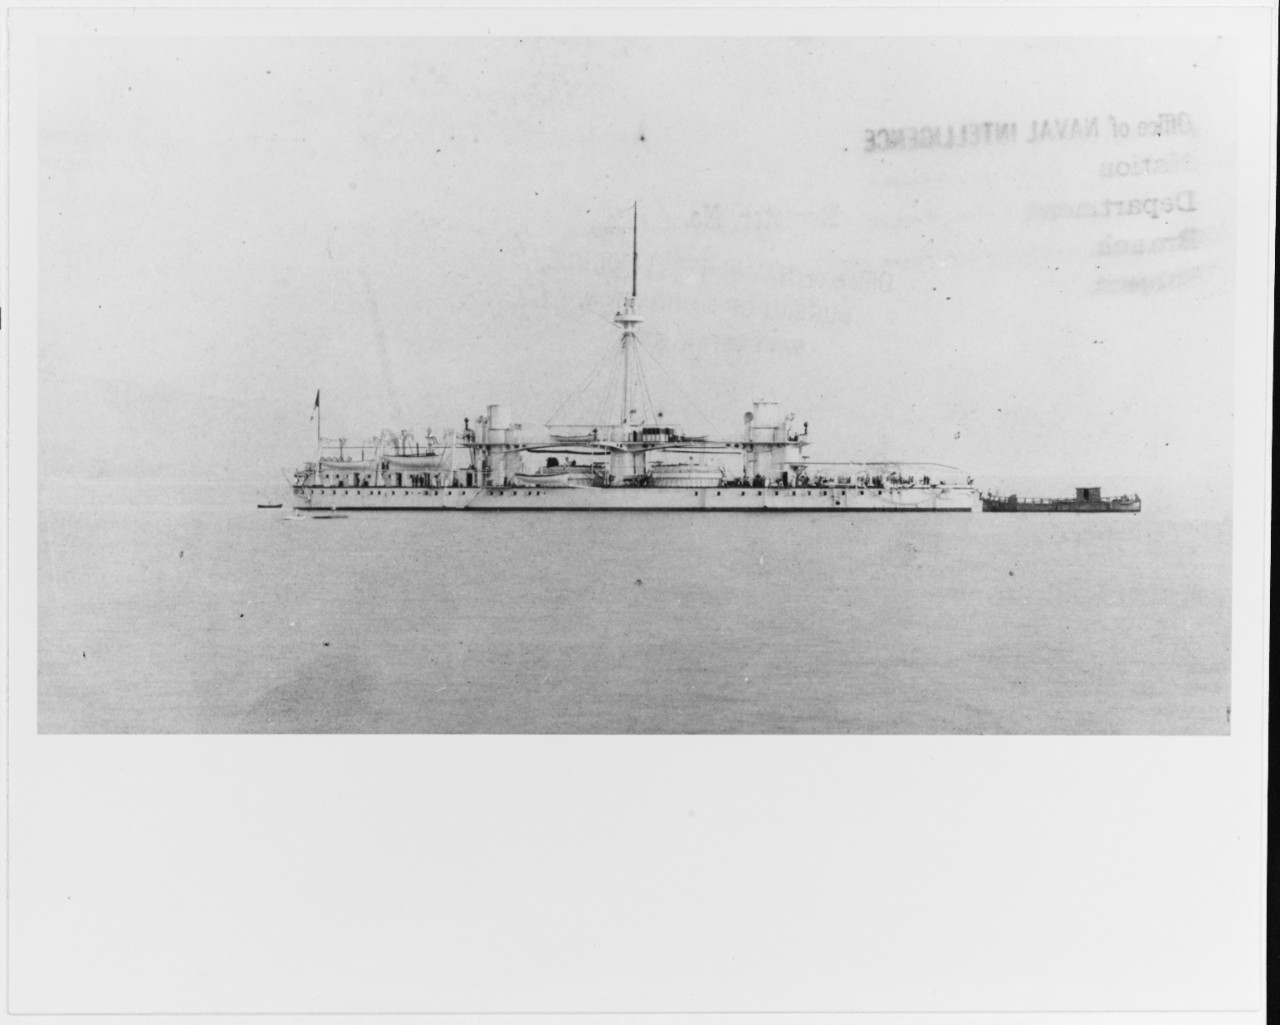 DANDOLO (Italian battleship, 1876-1920)